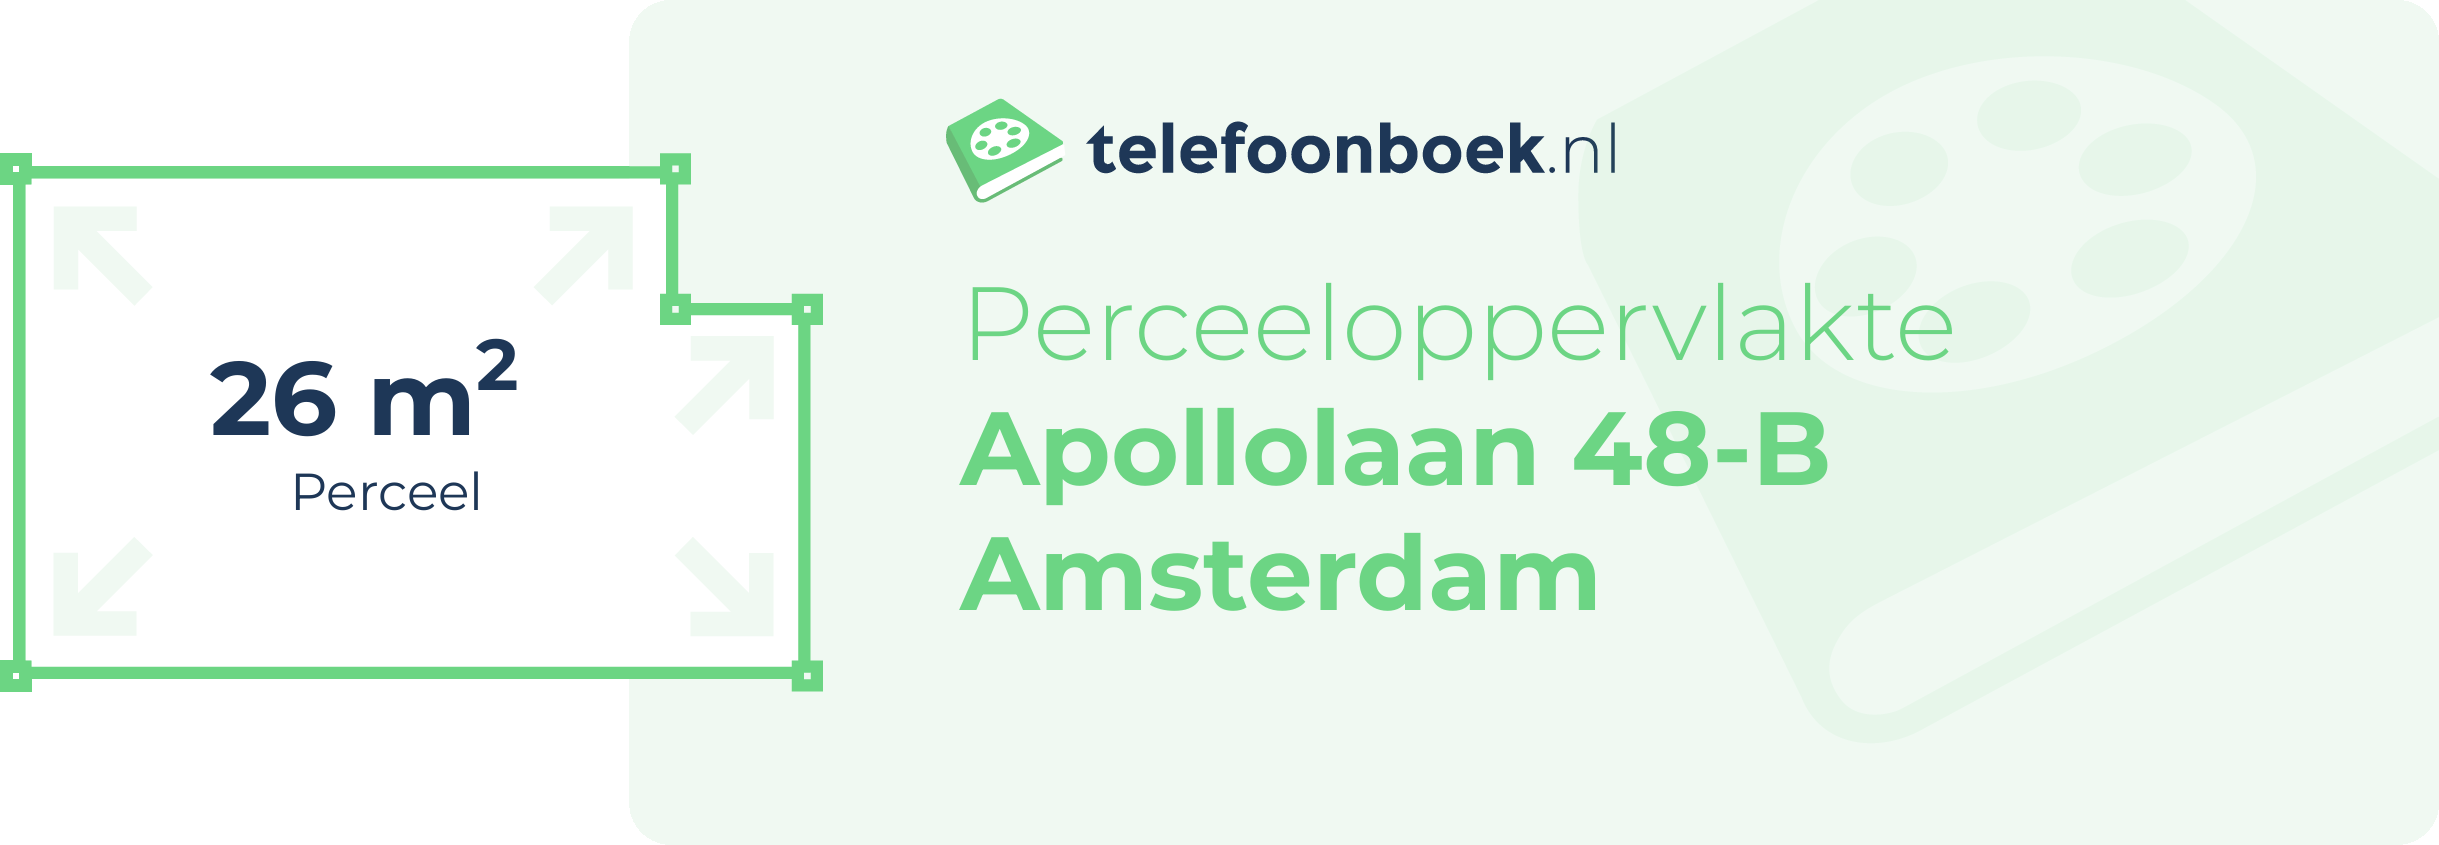 Perceeloppervlakte Apollolaan 48-B Amsterdam